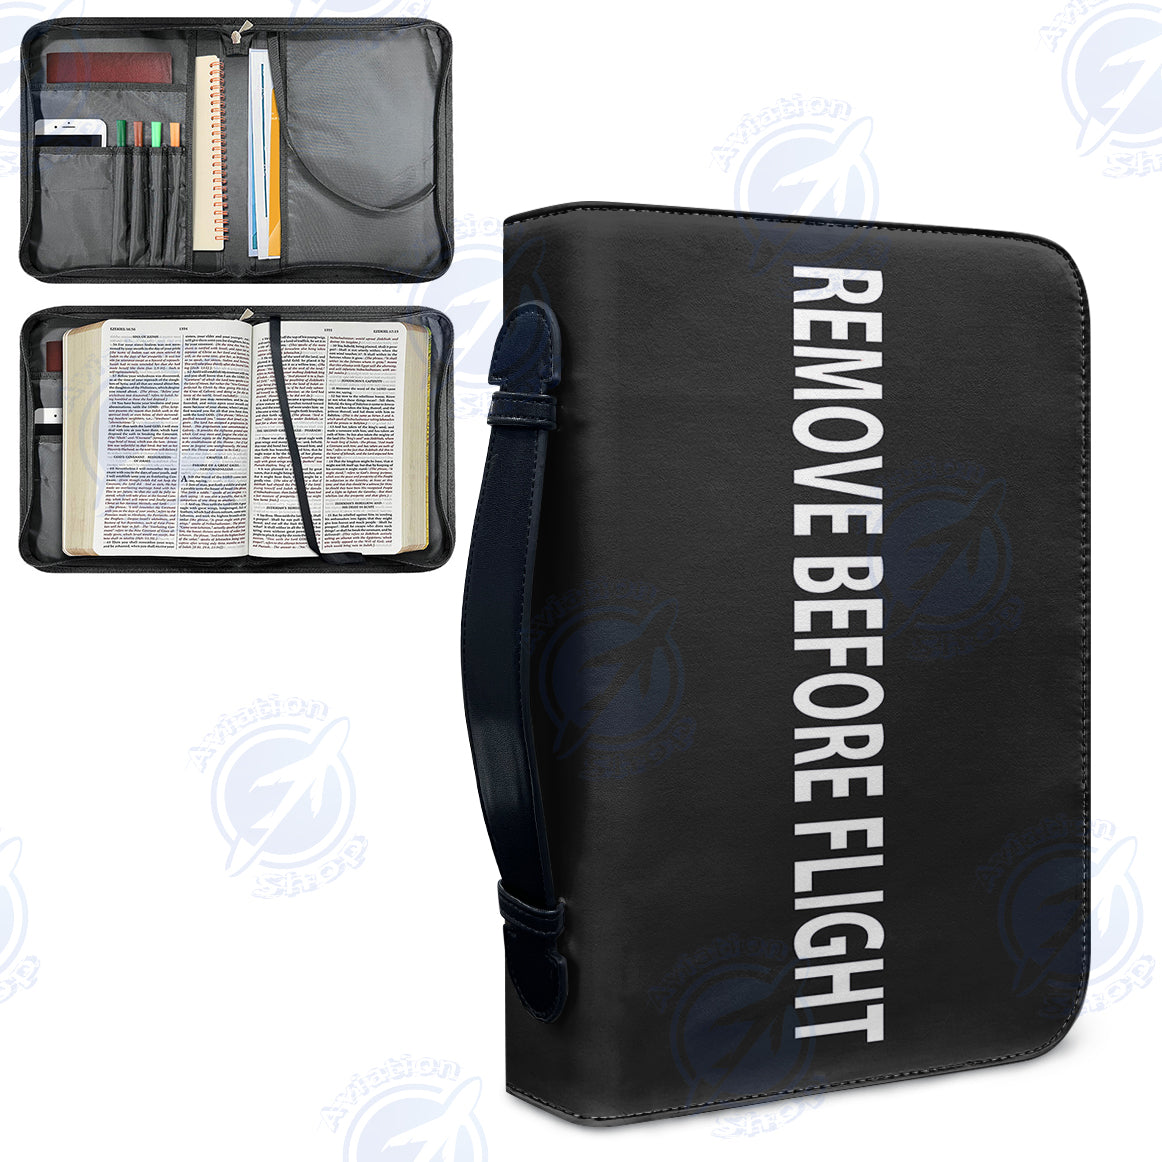 REMOVE BEFORE FLIGHT-Black Designed PU Accessories Bags